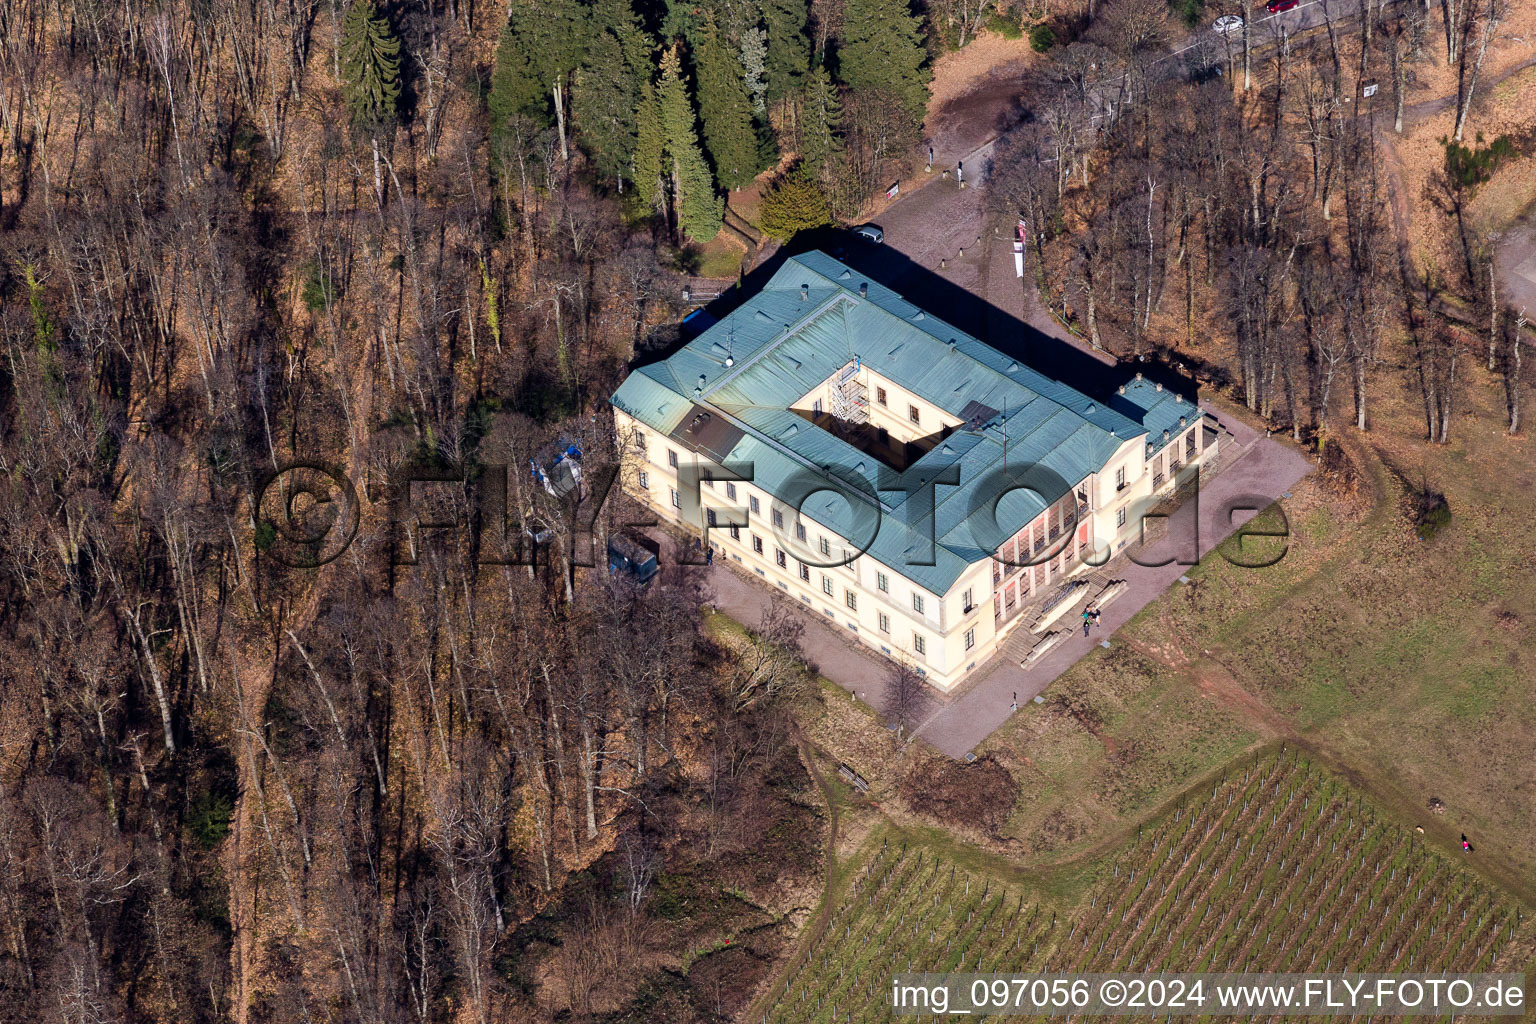 Palace Villa Ludwigshoehe in Edenkoben in the state Rhineland-Palatinate, Germany